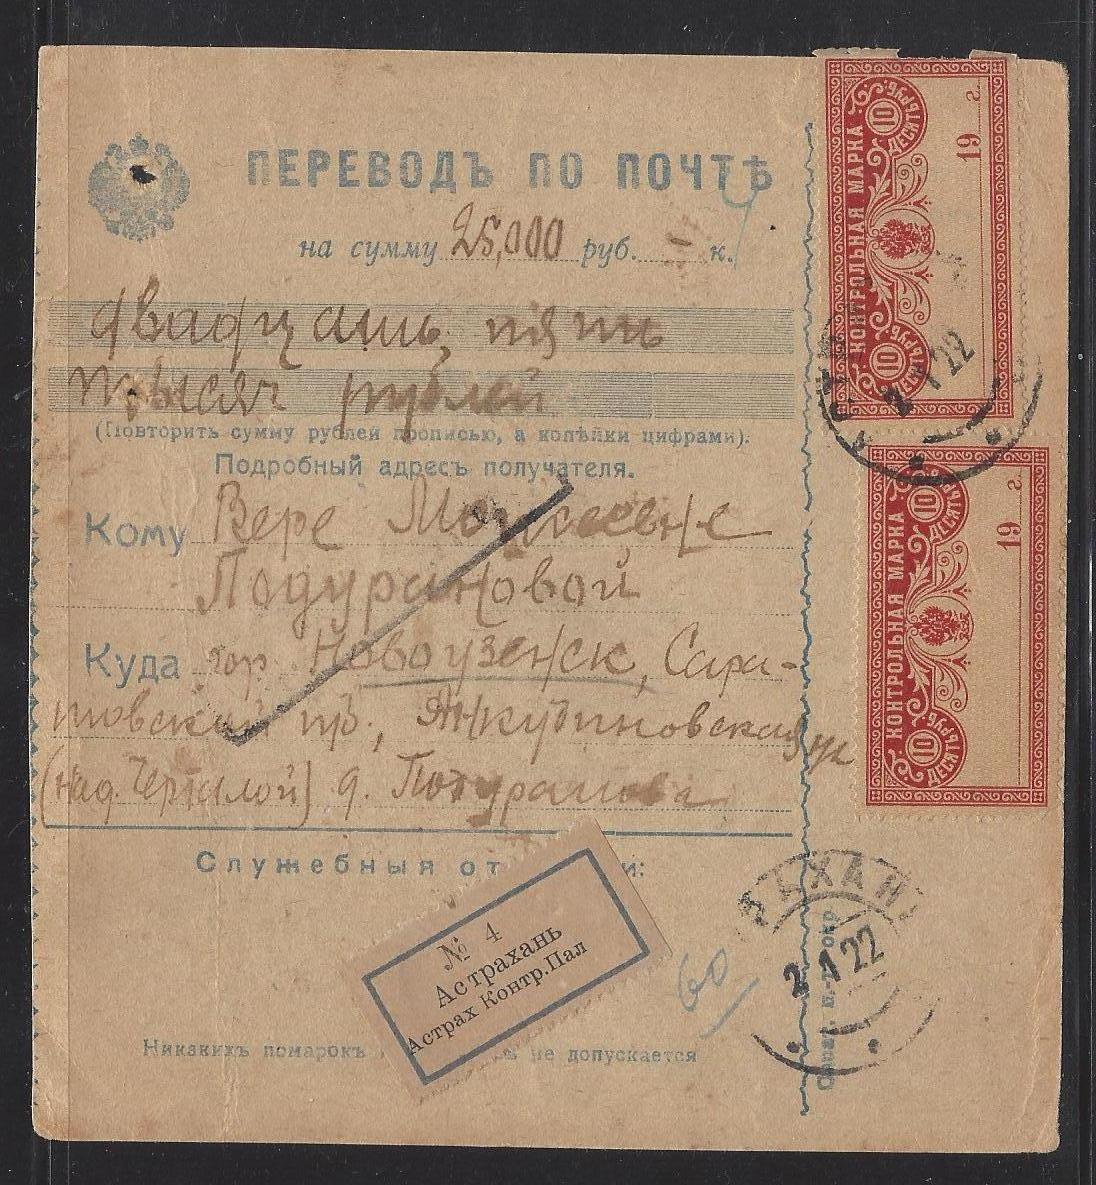 Russia Postal History - Soviet Federation Republic RUSSIAN SOVIET FEDERATED REP. Scott 1924 